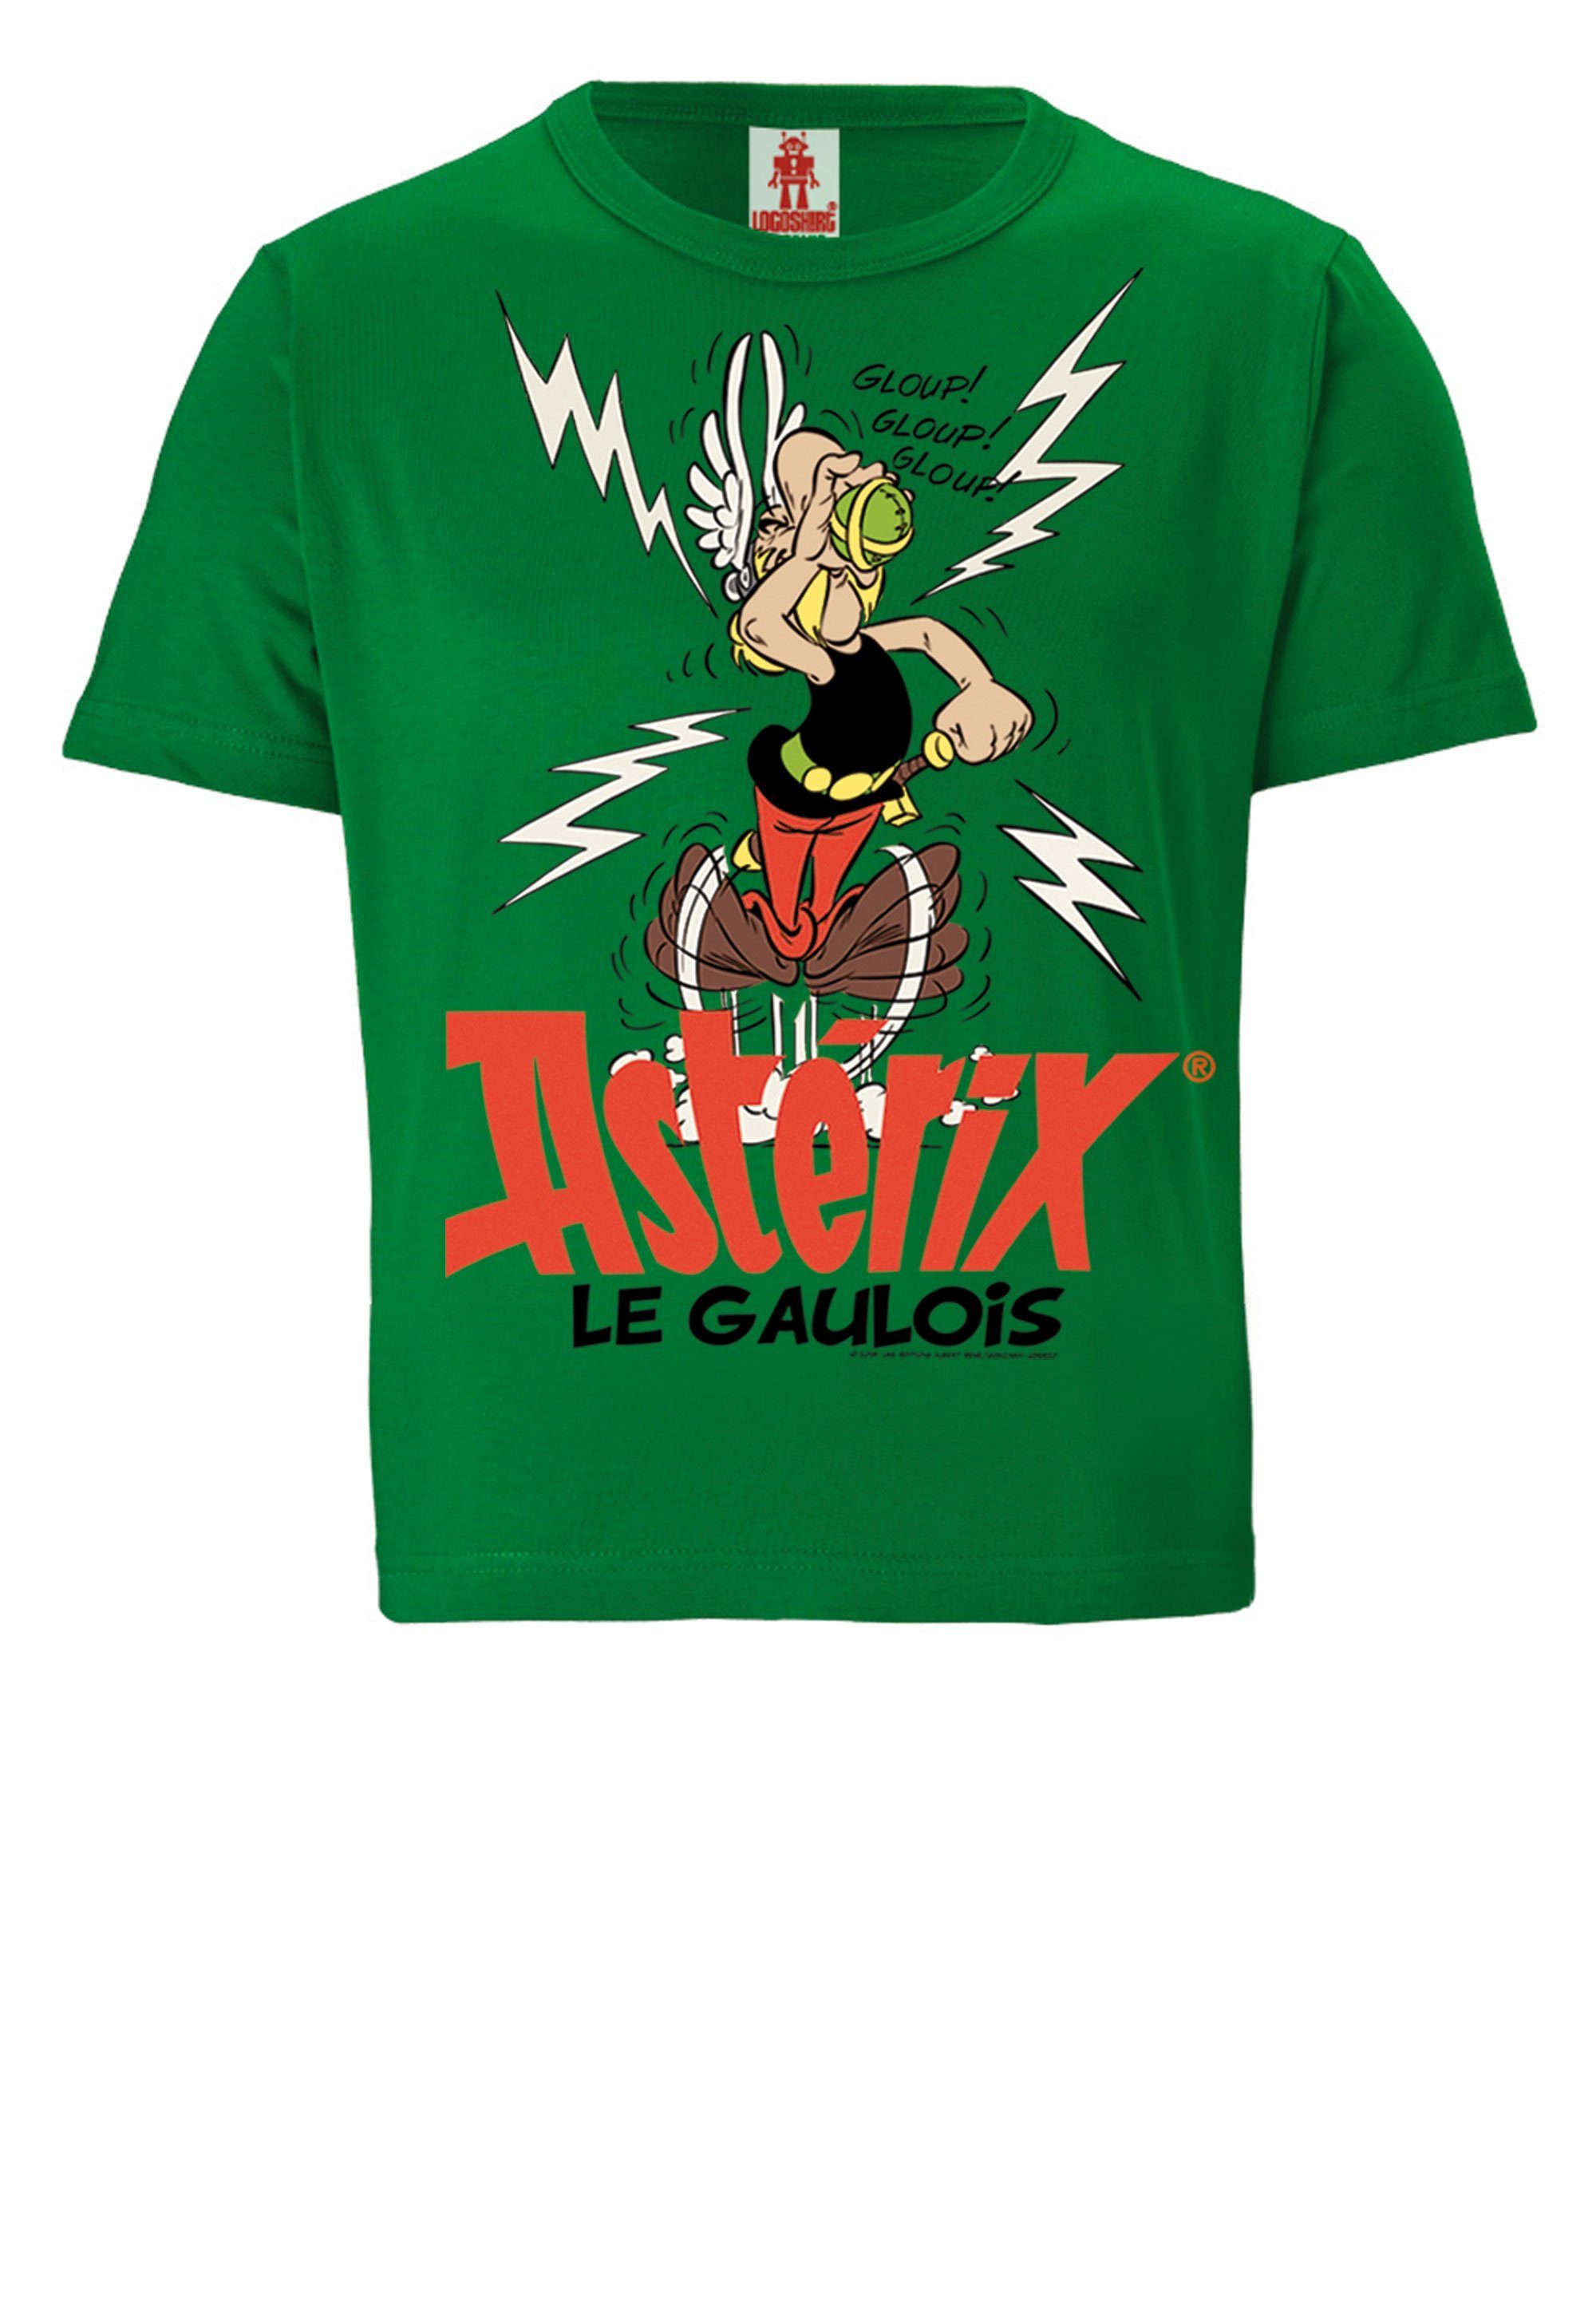 Asterix T-Shirt coolem Gaulois le Print mit LOGOSHIRT